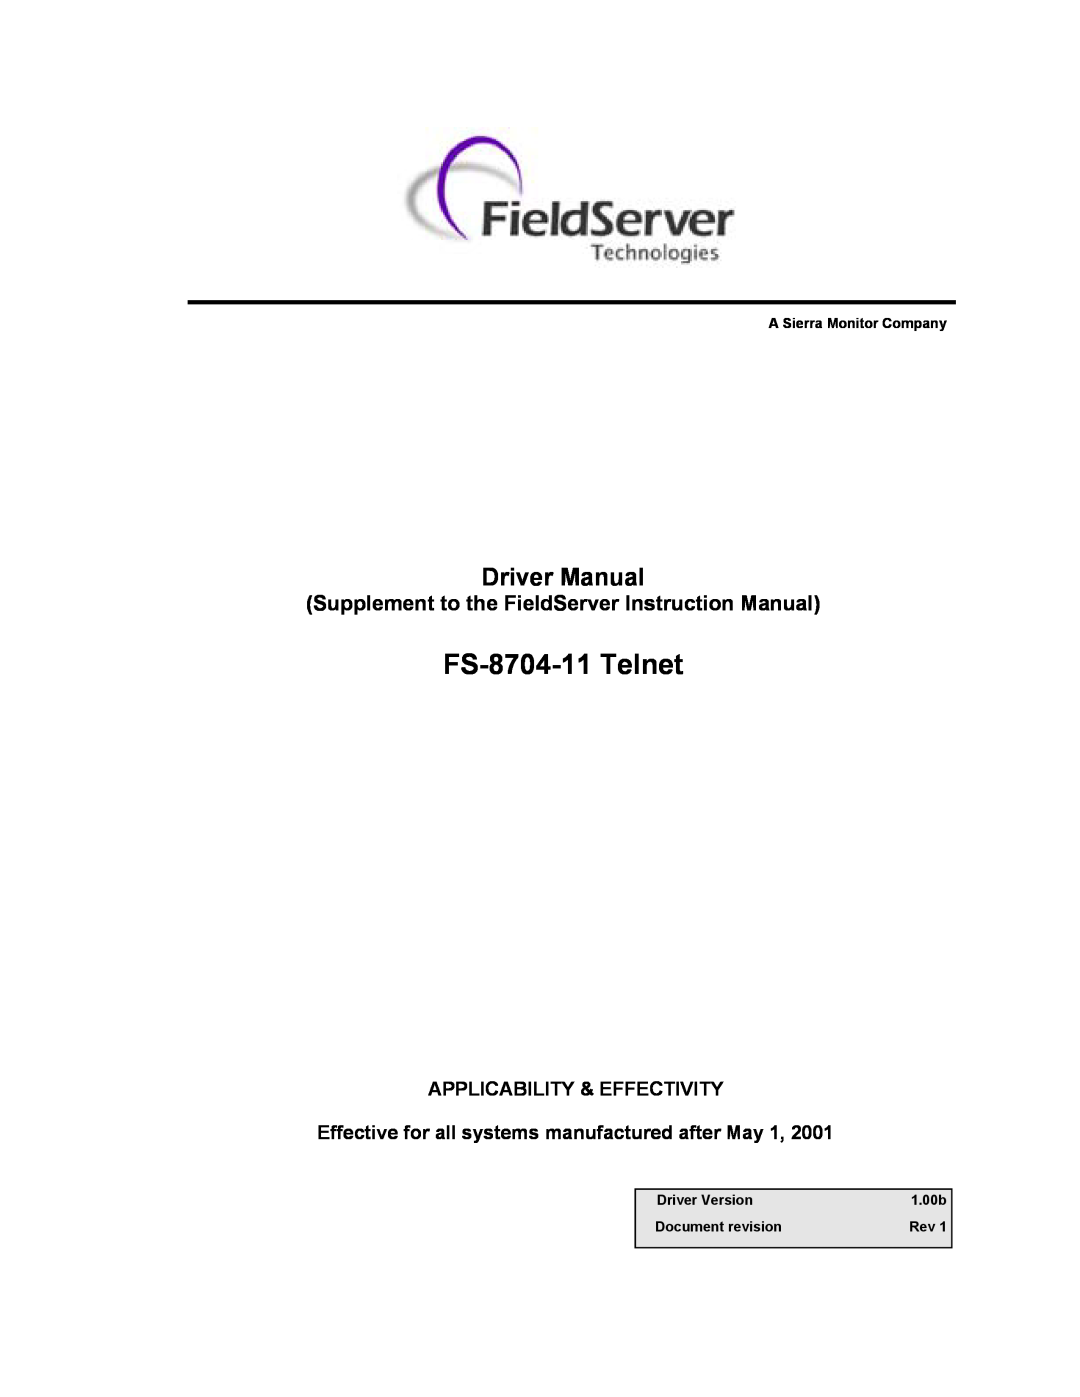 FieldServer FS-8704-11 instruction manual Driver Manual, Supplement to the FieldServer Instruction Manual, Driver Version 